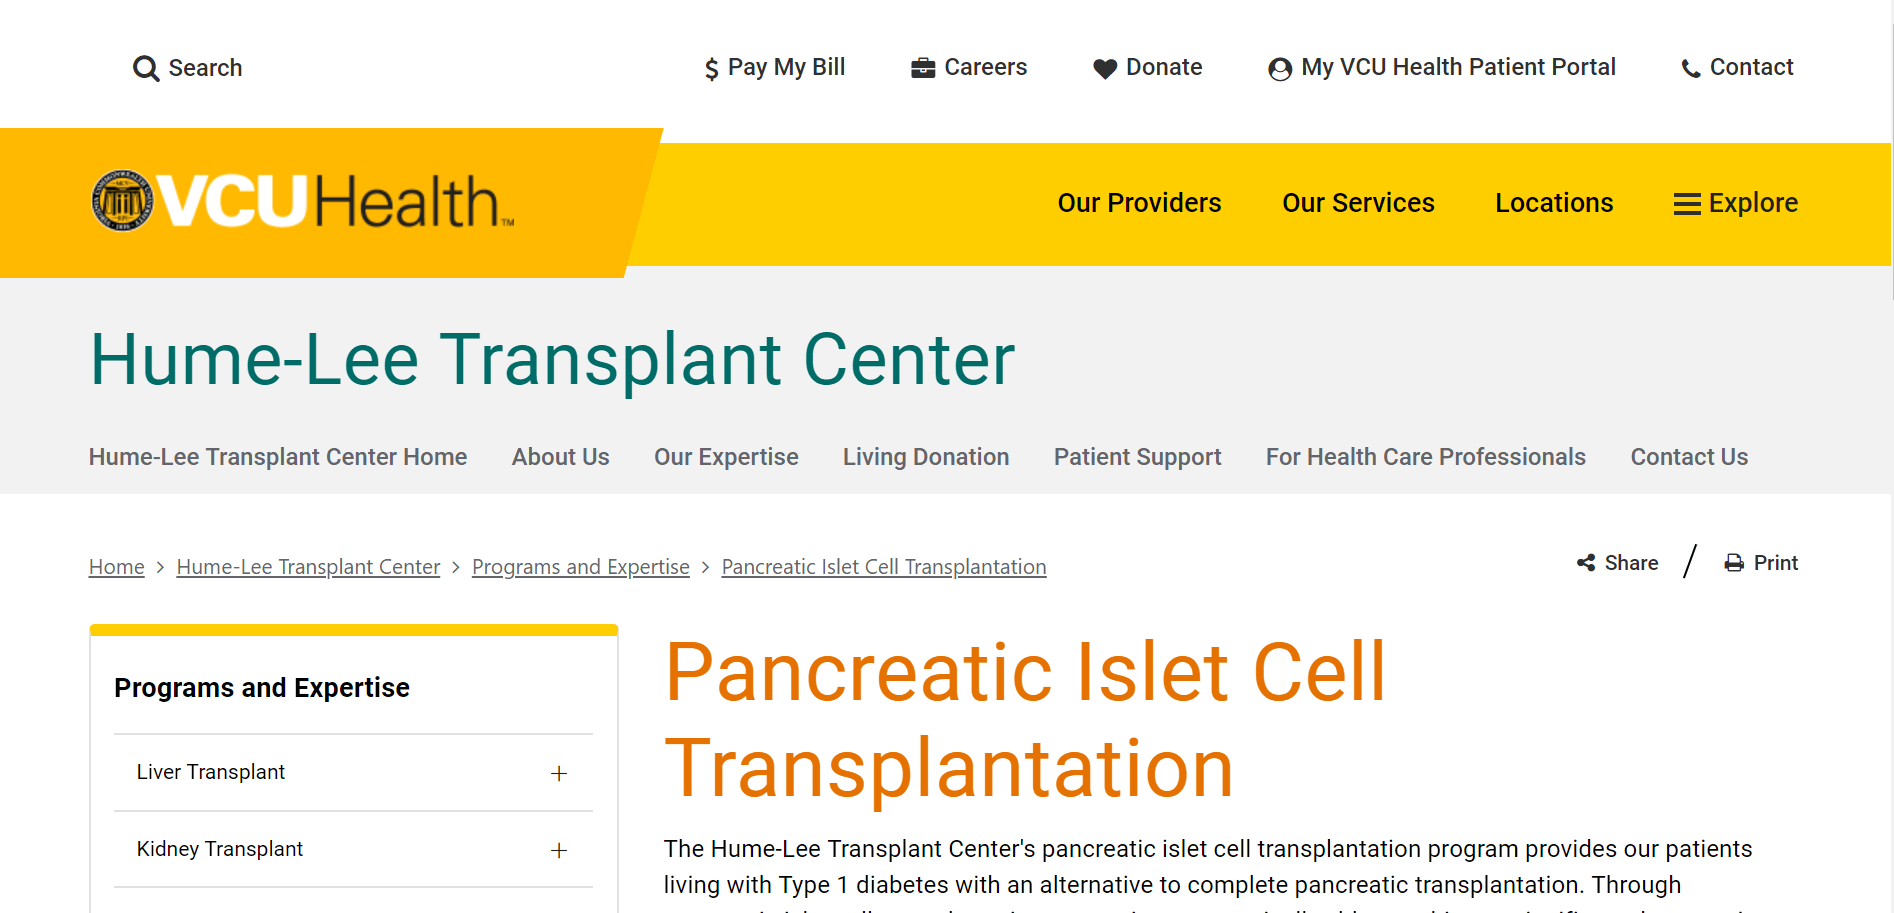 Virginia Commonwealth University Health, Hume-Lee Transplant Center, Pancreatic Islet Cell Transplantation